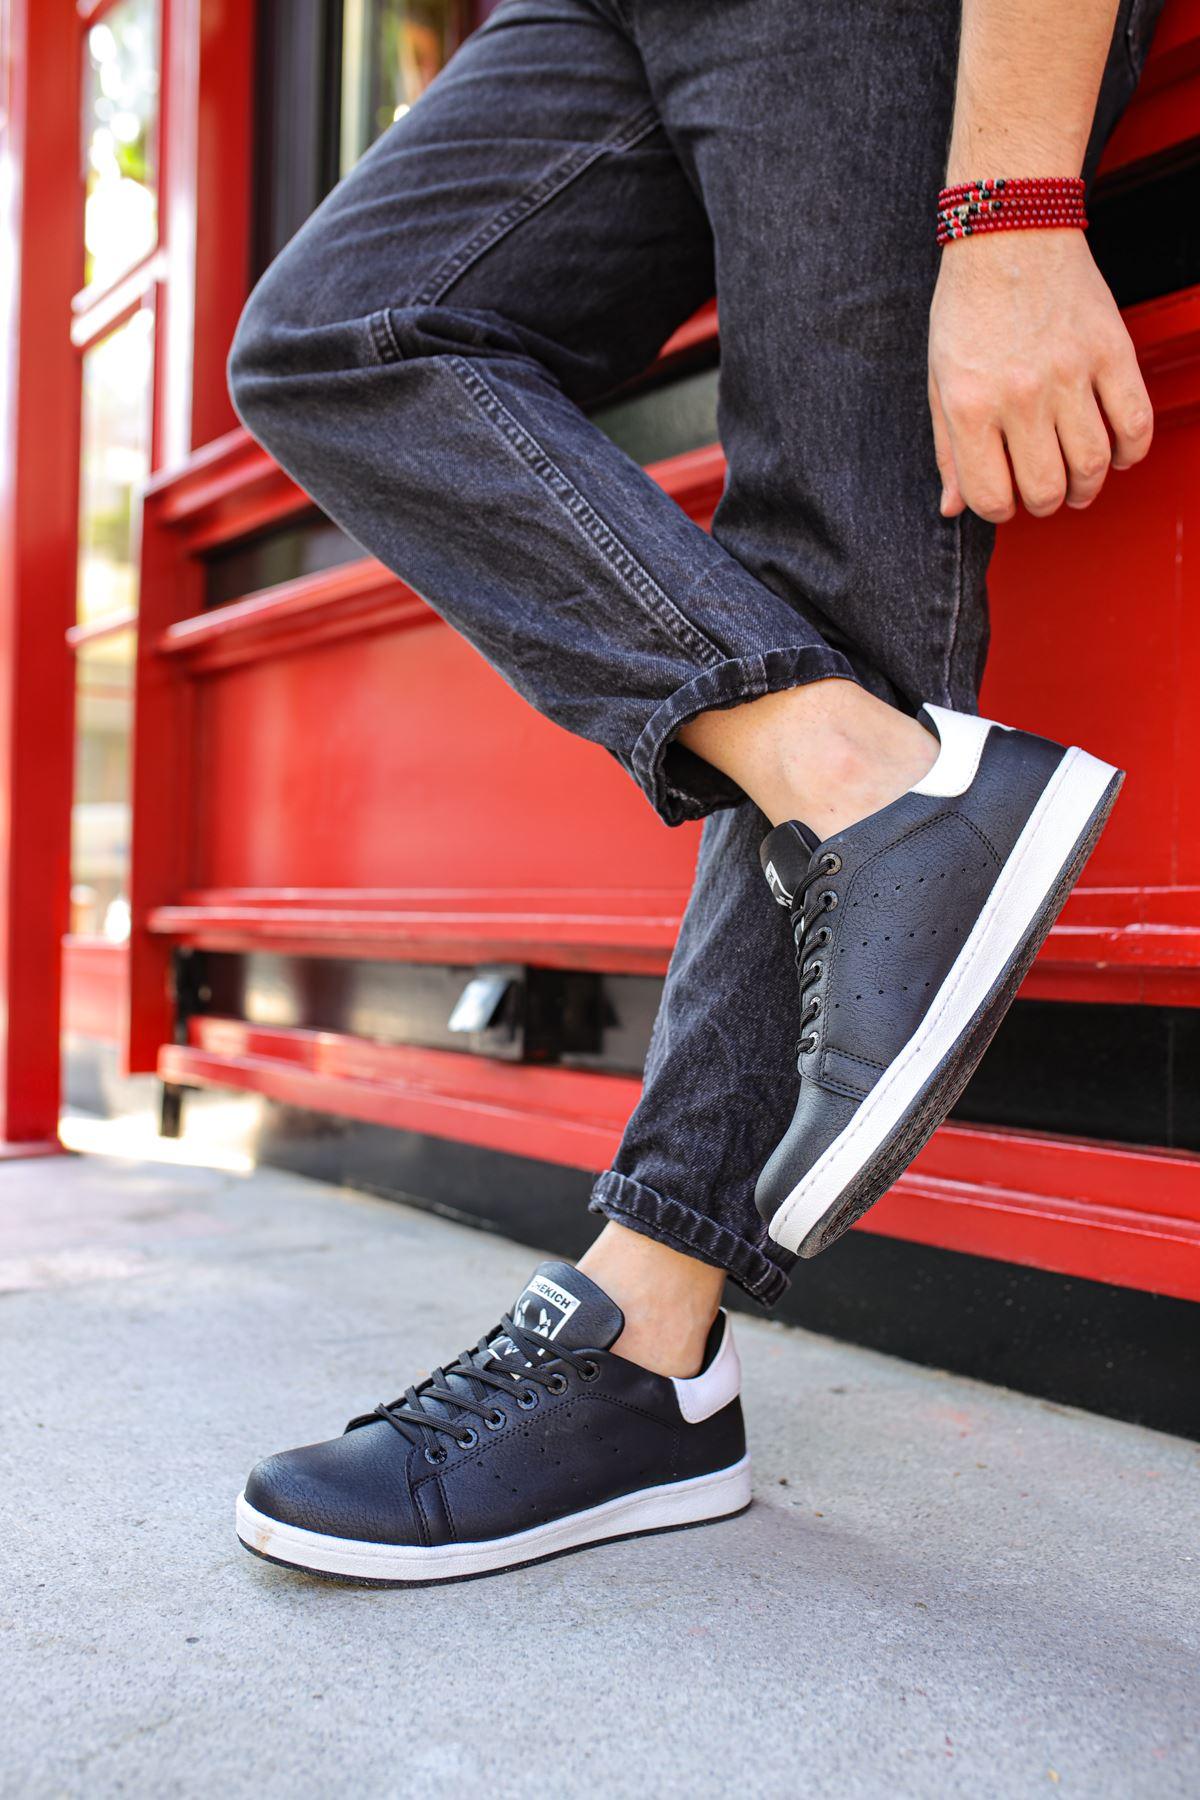 CH977 Garni BT Men's Shoes BLACK/WHITE - STREET MODE ™